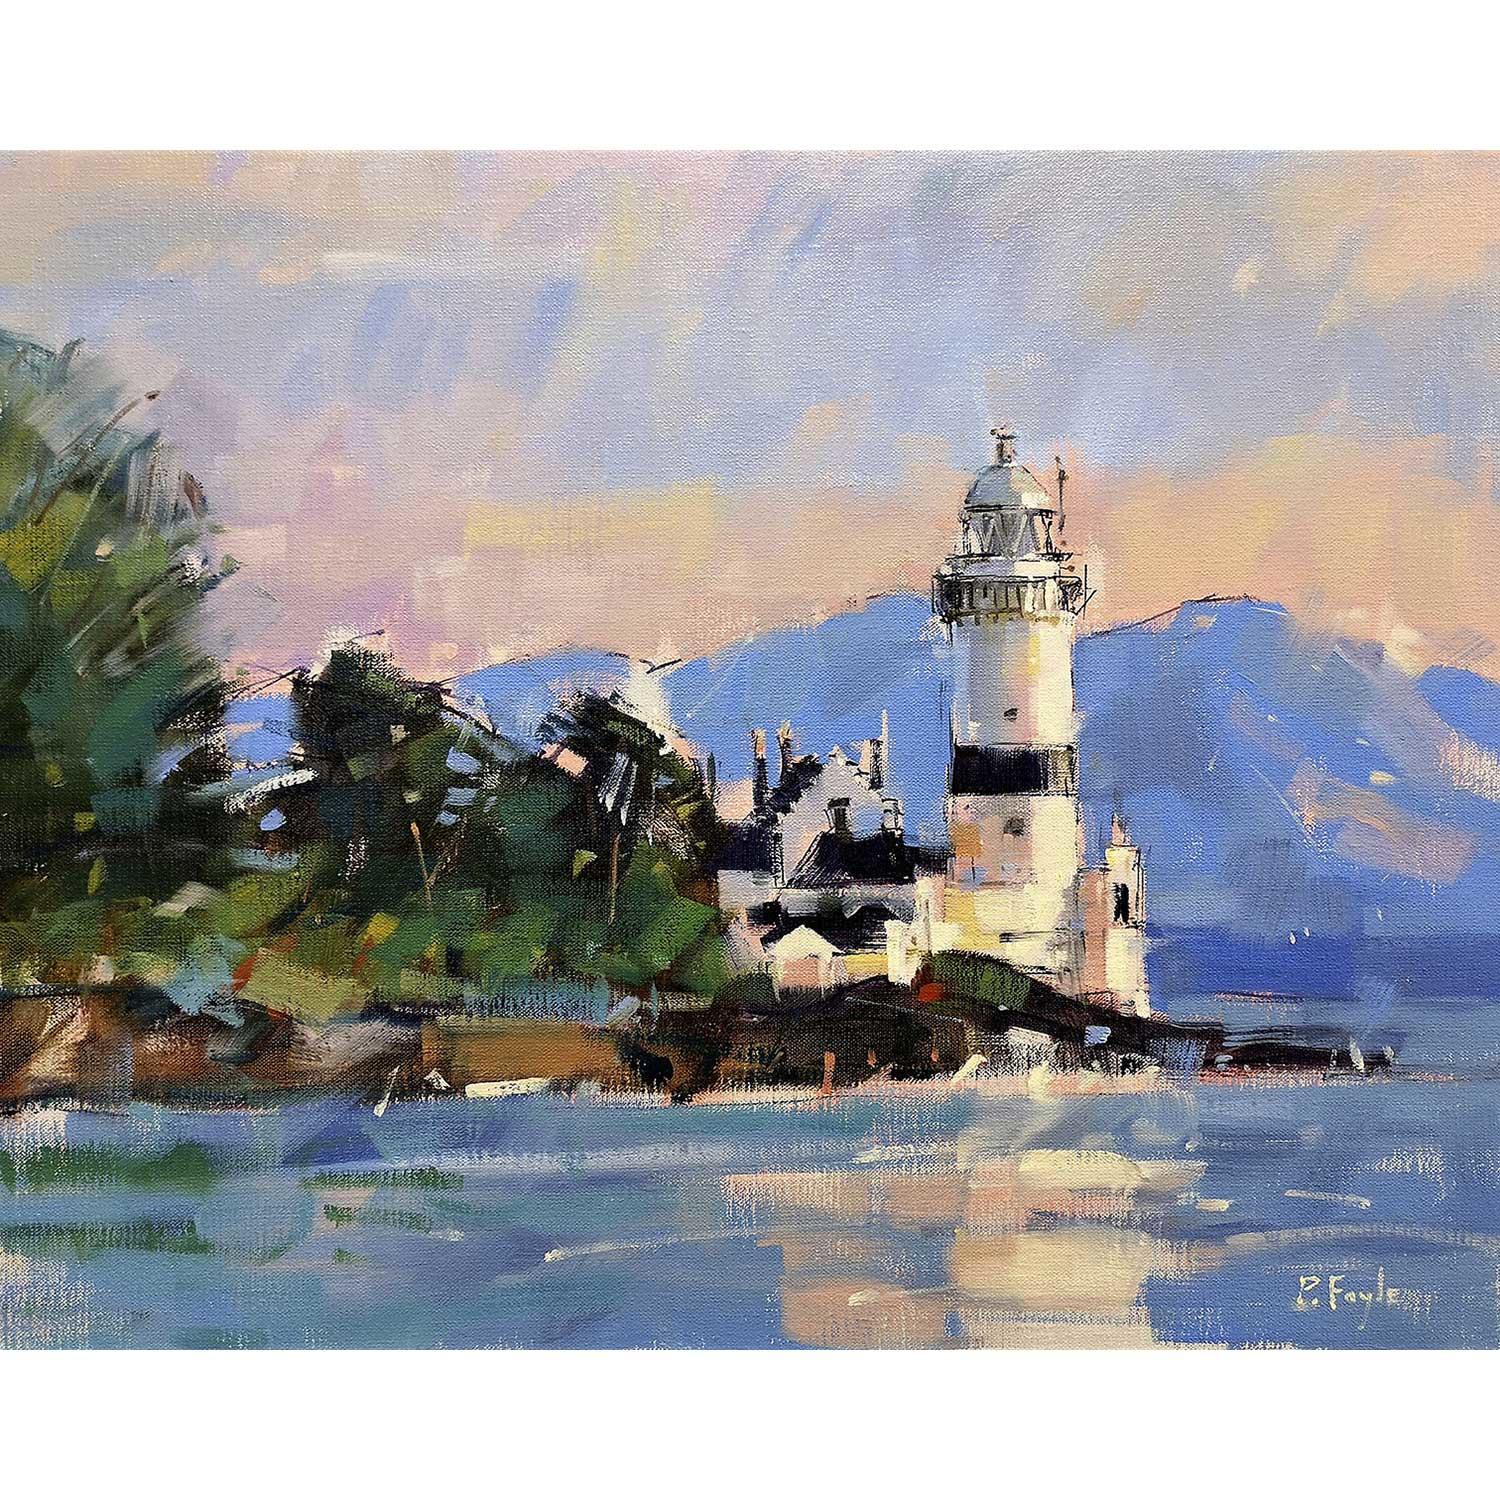 Evening, Cloch Lighthouse by Peter Foyle